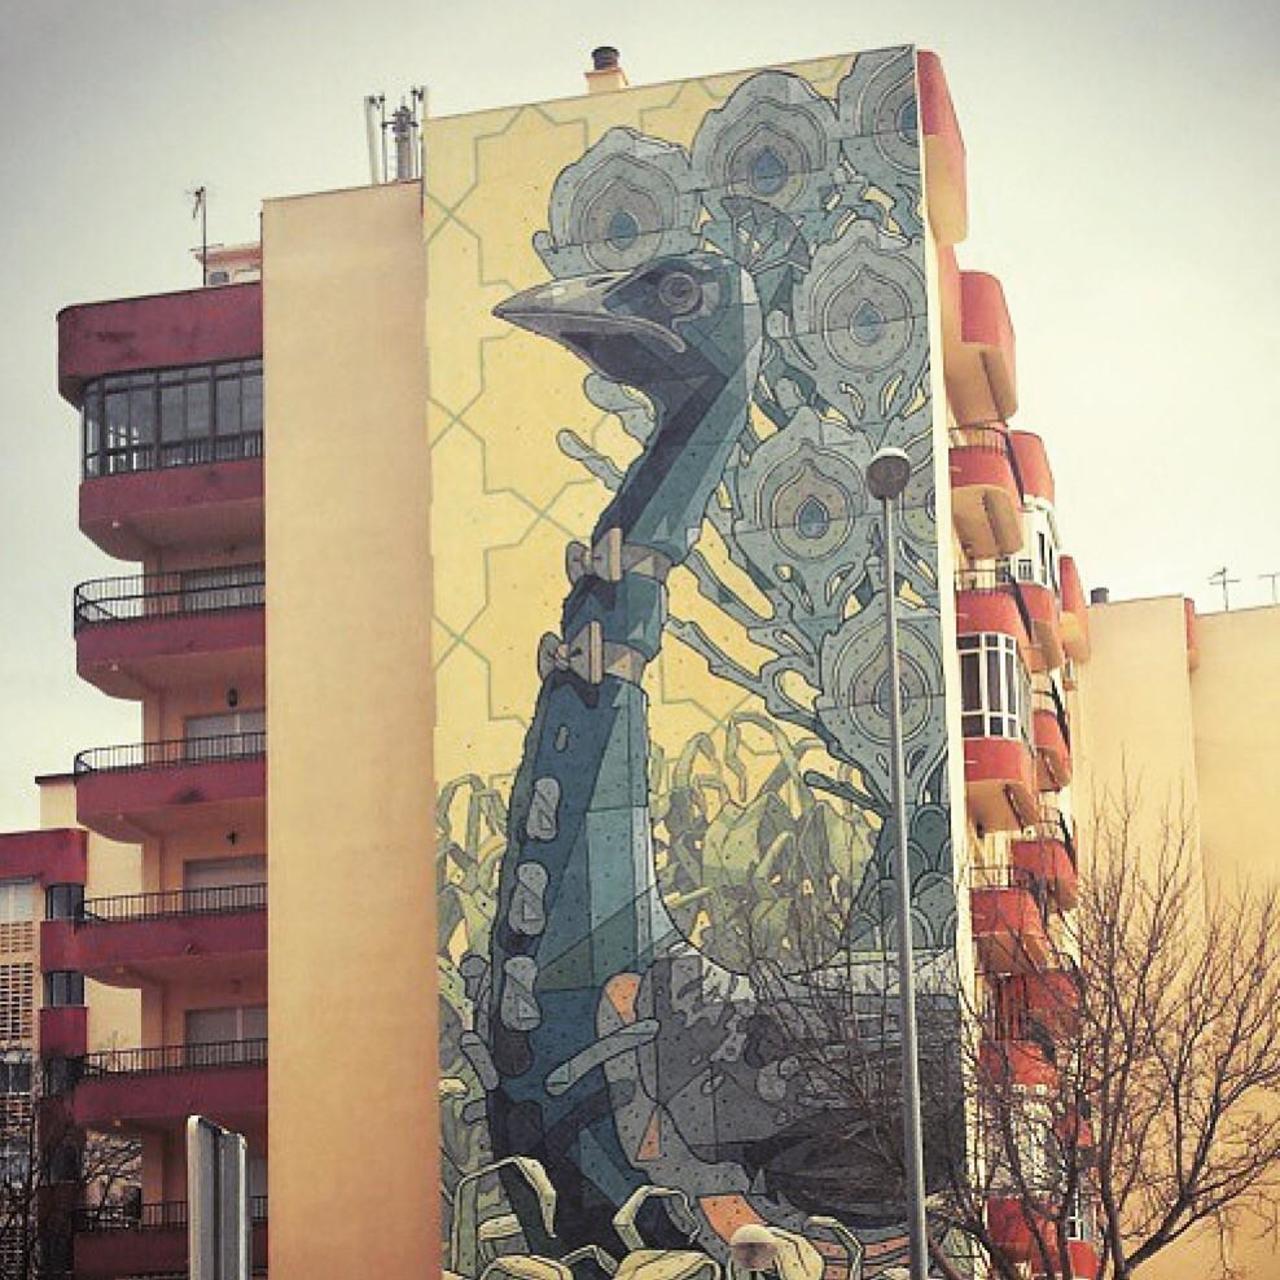 RT @ONESTLA99: RT “@streetcnina: #StreetArt #UrbanArt #murales #mural #graffiti http://www.soupmagazine.tumblr.com http://t.co/phMfdL1nz8”